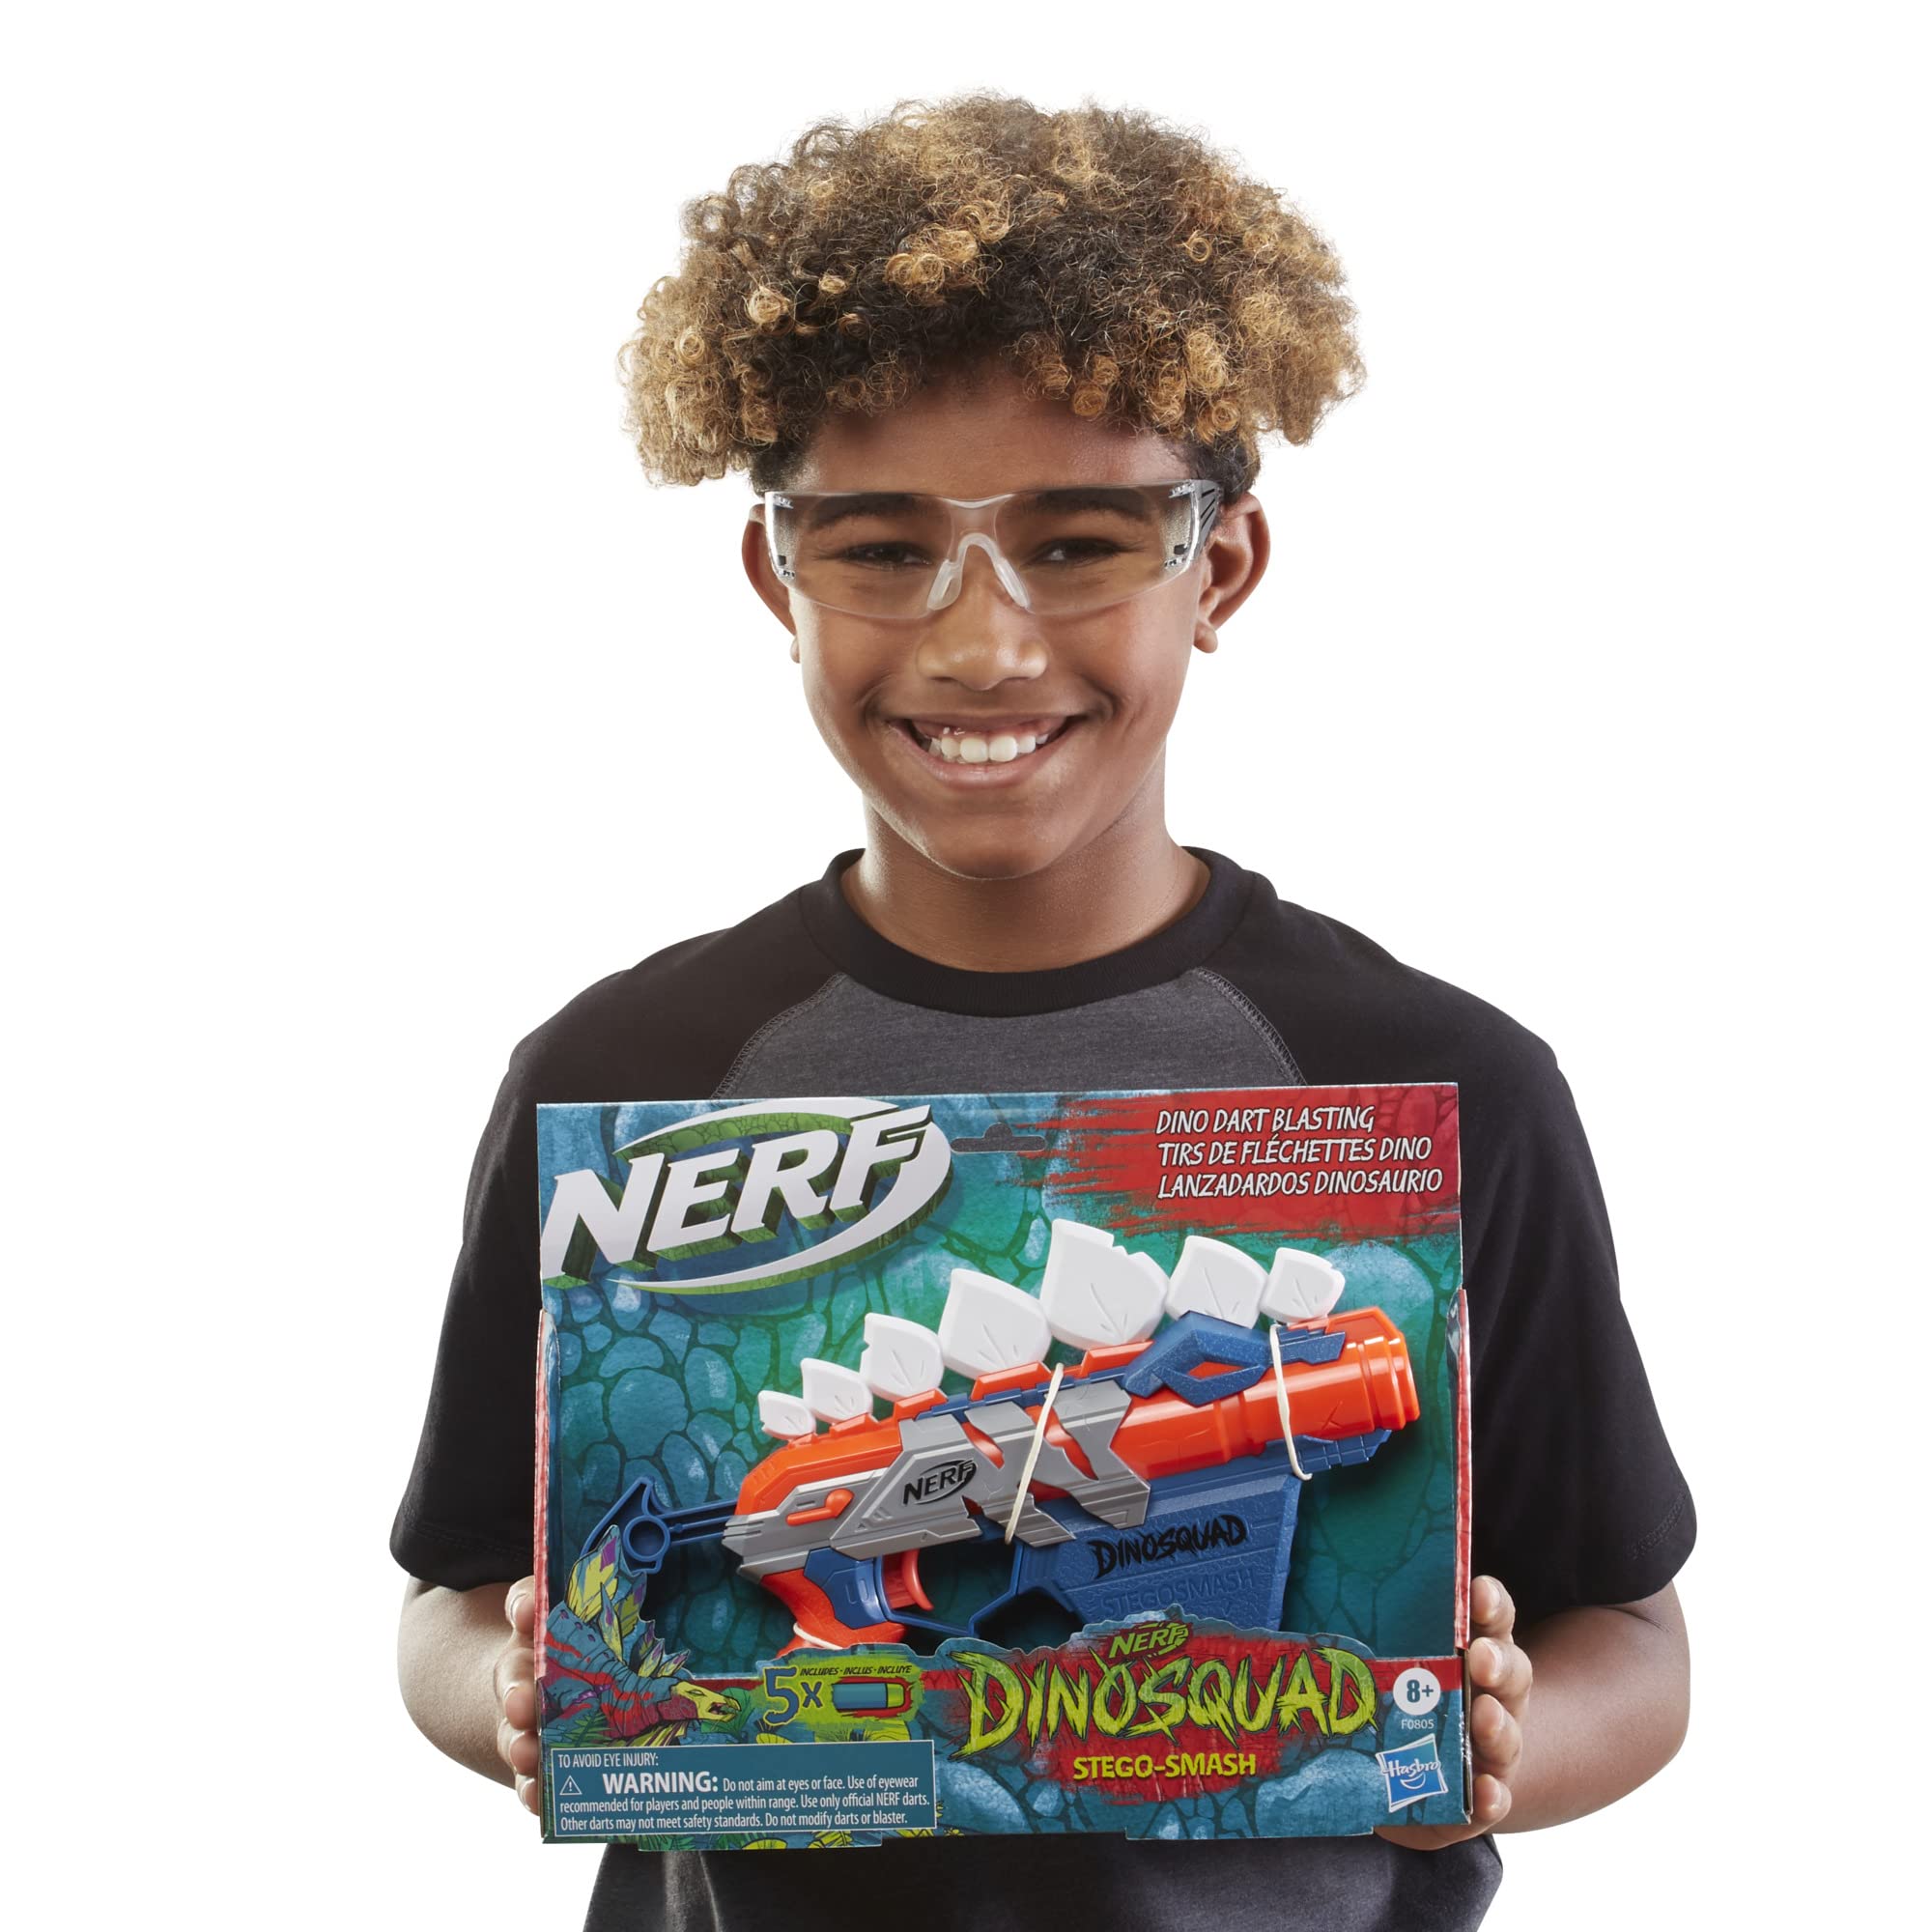 Nerf DinoSquad Stego-Smash Dart Blaster, 5 Nerf Elite Darts, Kids Outdoor Toys, Dinosaur Toys for 8 Year Old Boys and Girls and Up, Stegosaurus Dinosaur Design